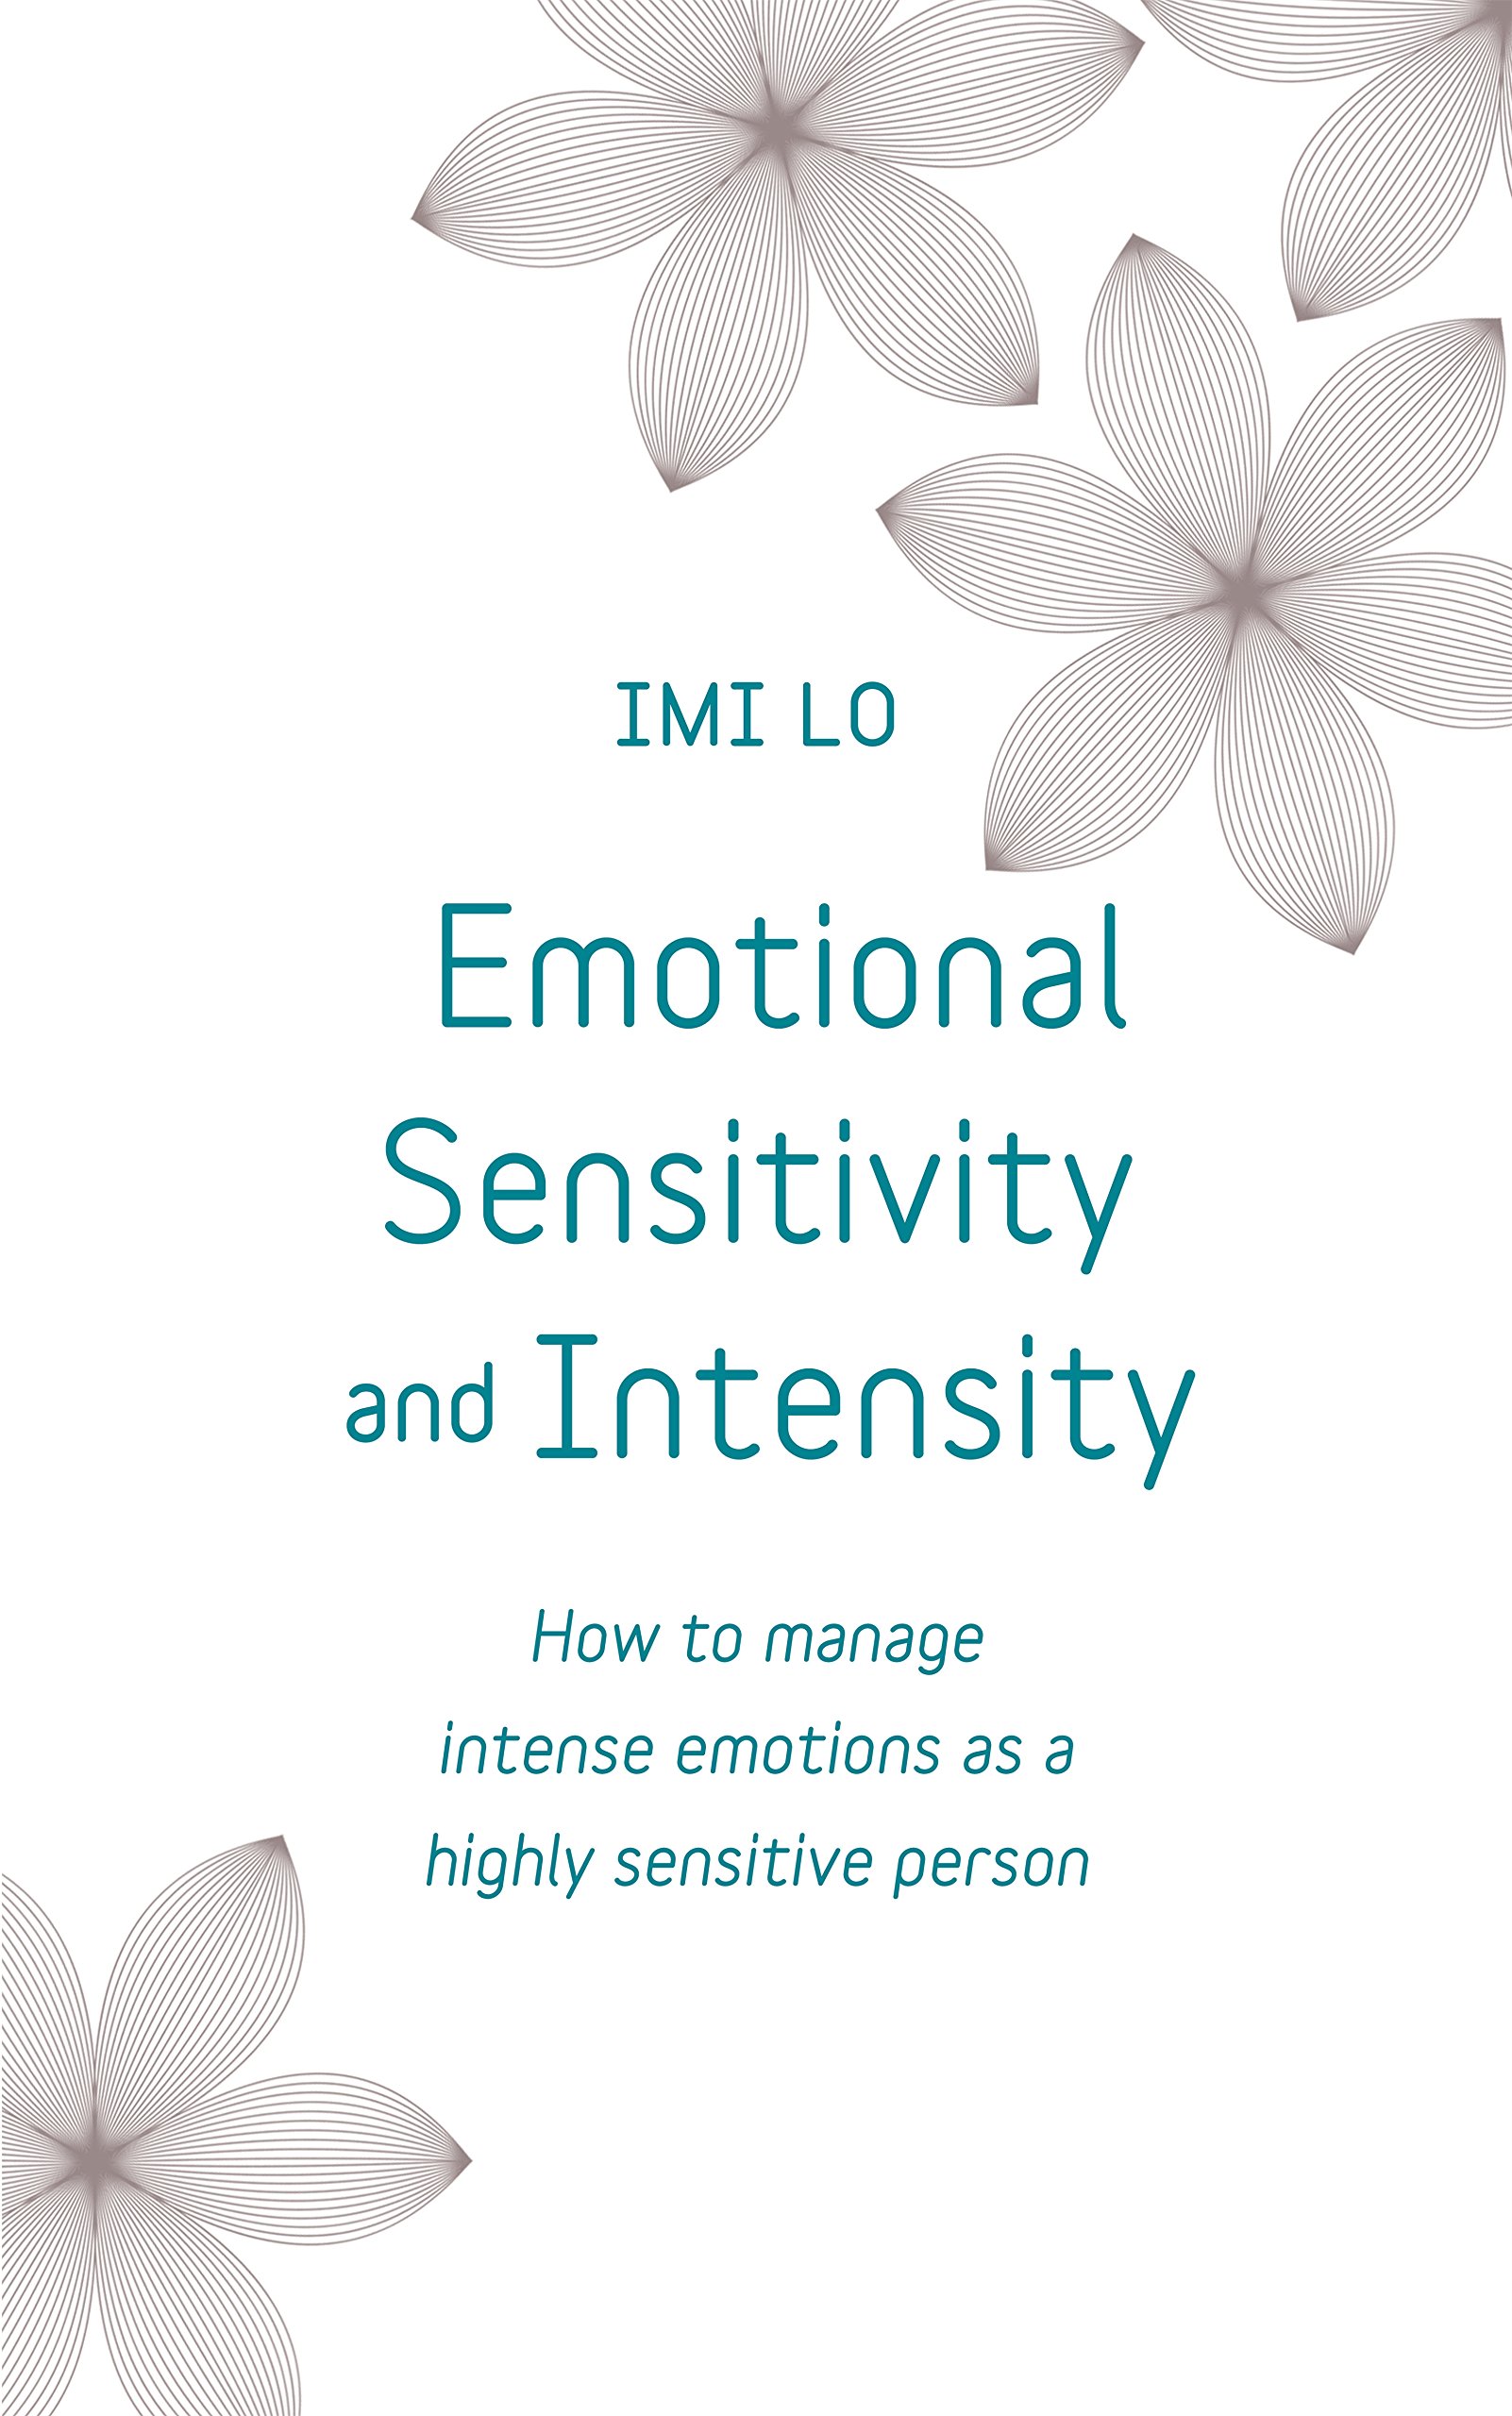 Emotional Sensitivity and Intensity | Imi Lo